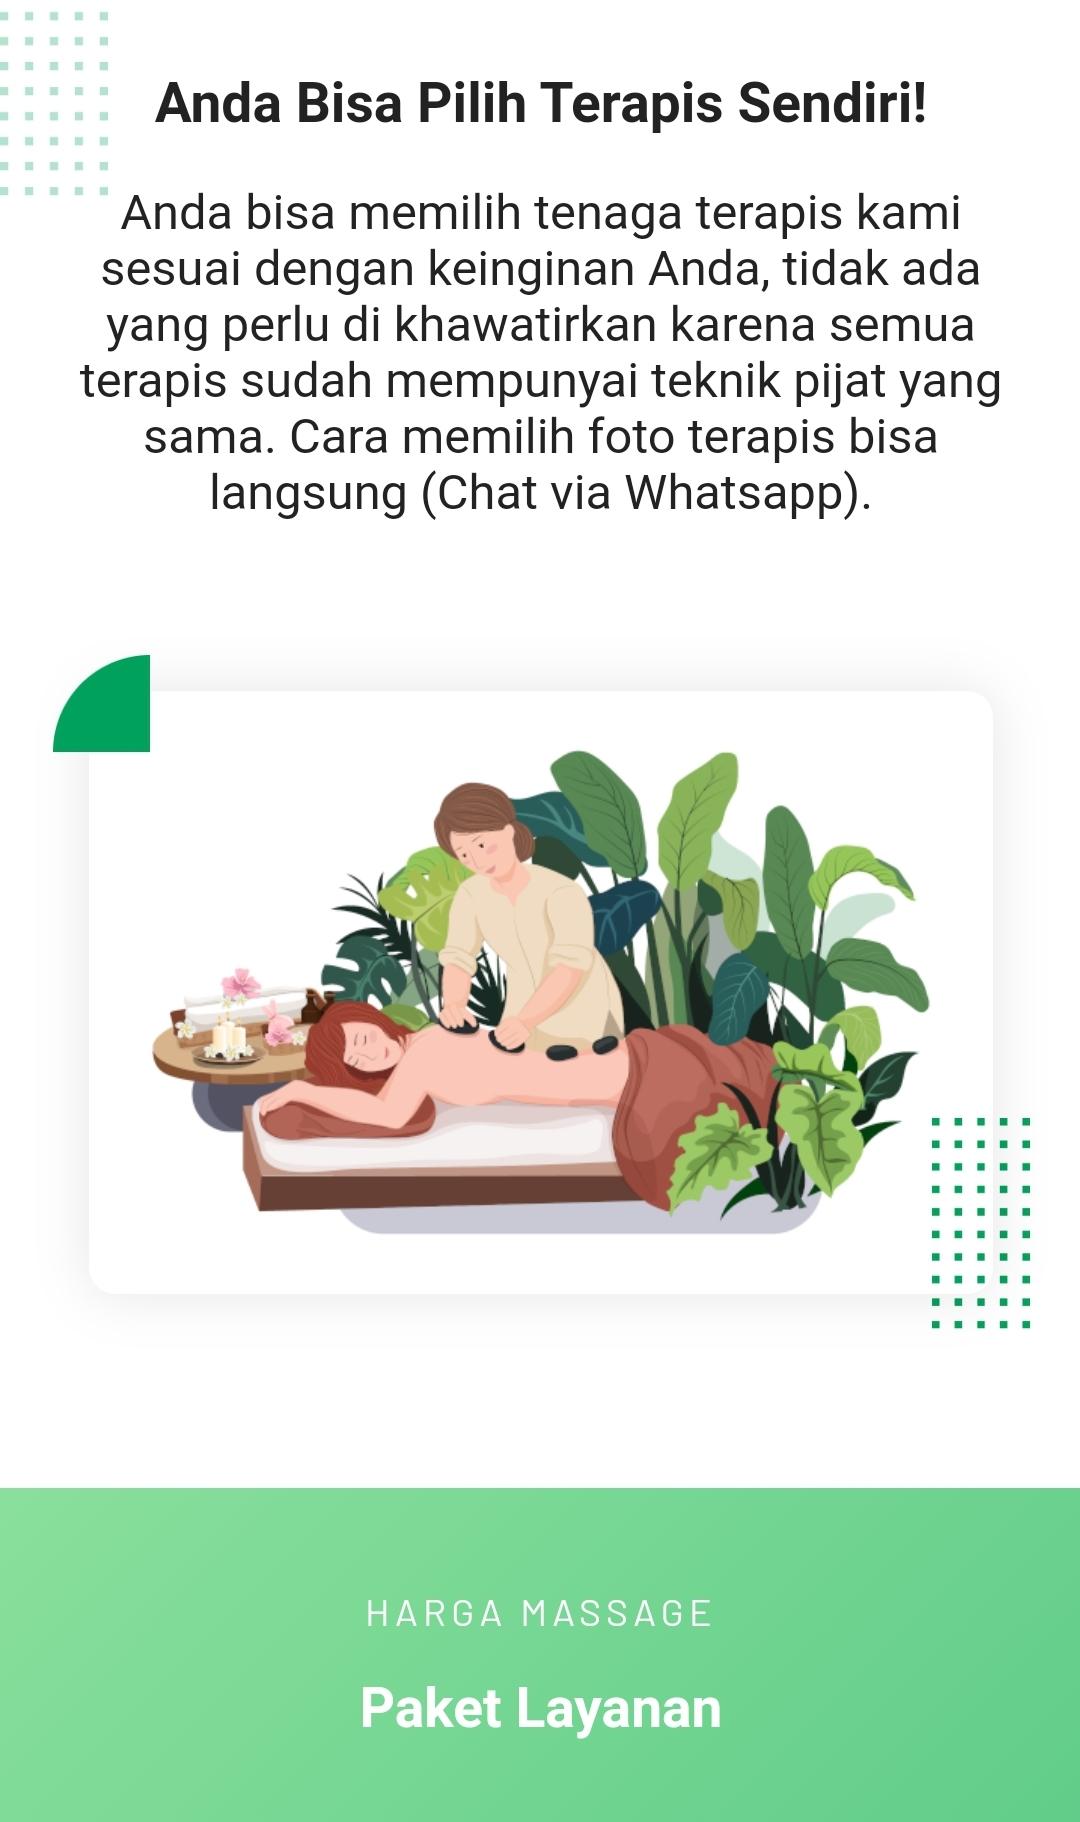 Massage & SPA Terdekat Murah APK for Android Download